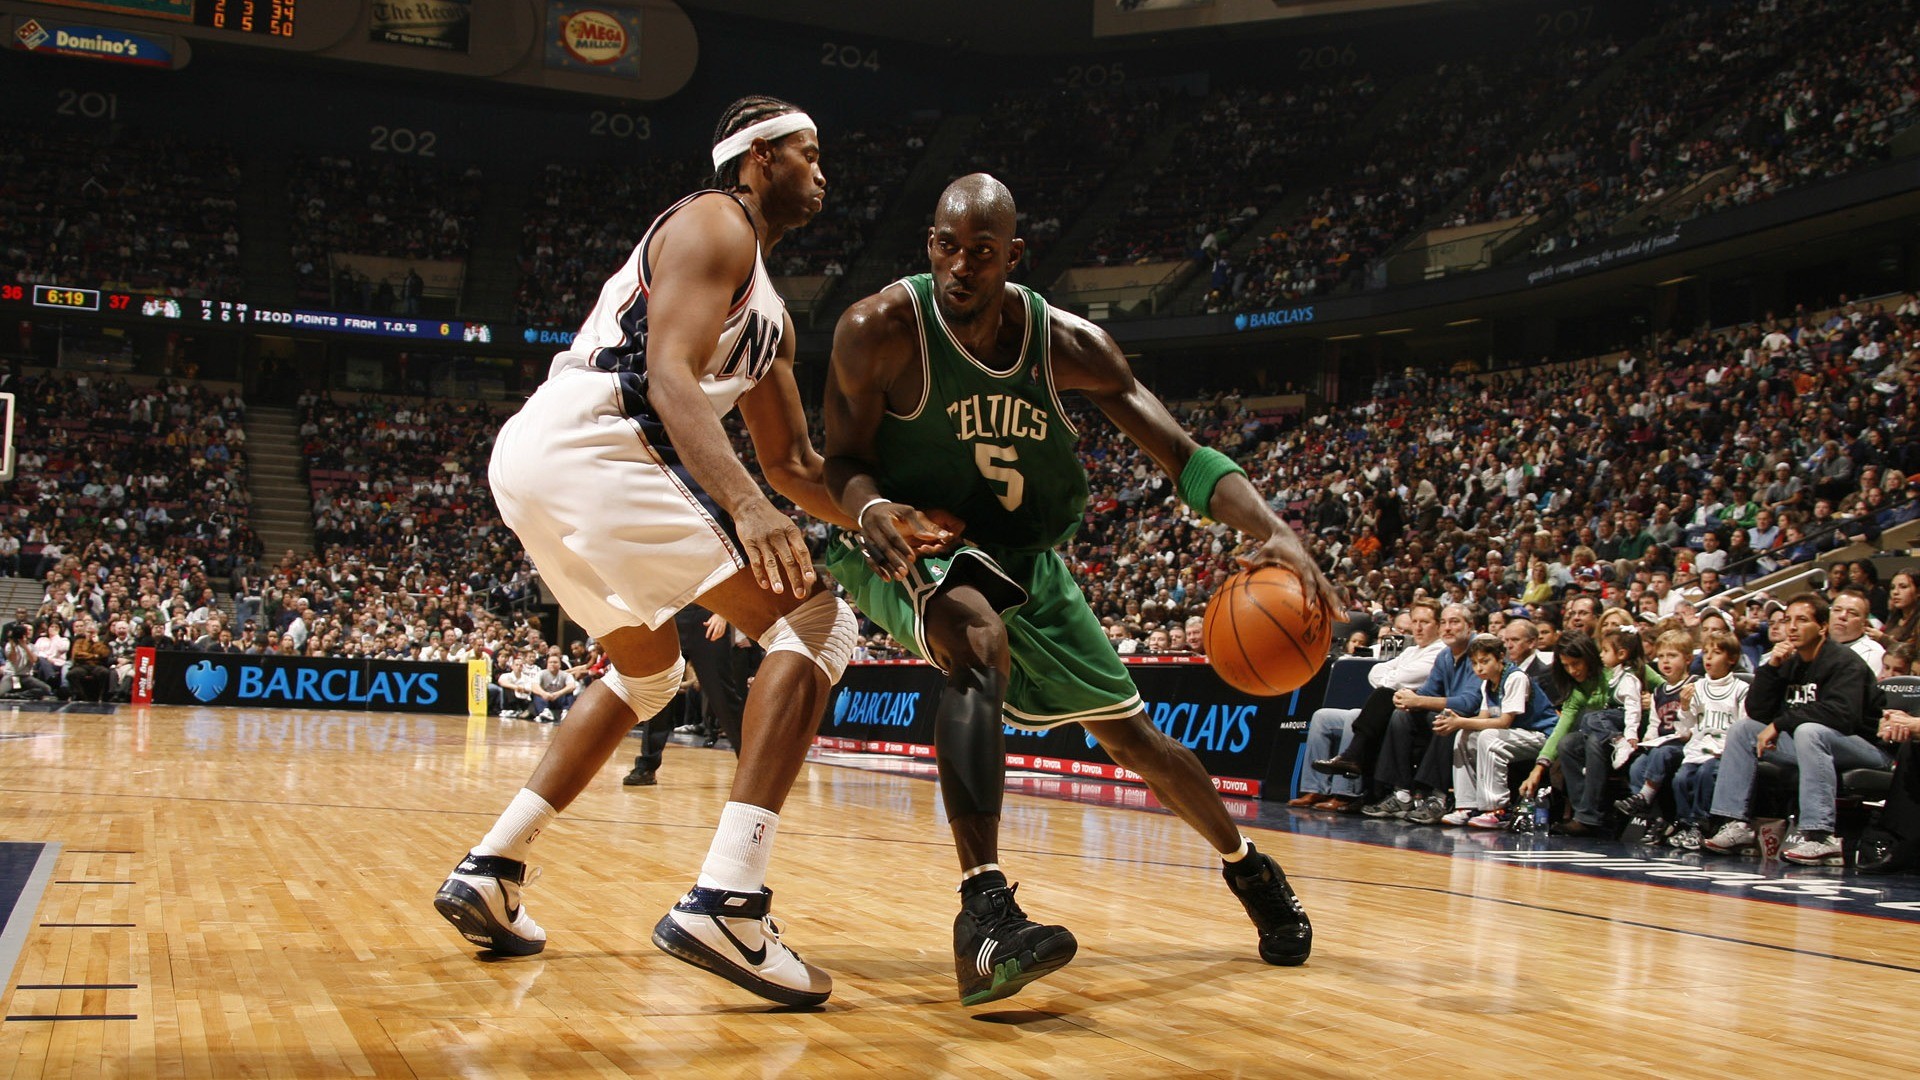 1920x1080 NBA Basketball Kevin Garnett Boston Celtics versus New Jersey Nets wallpaper